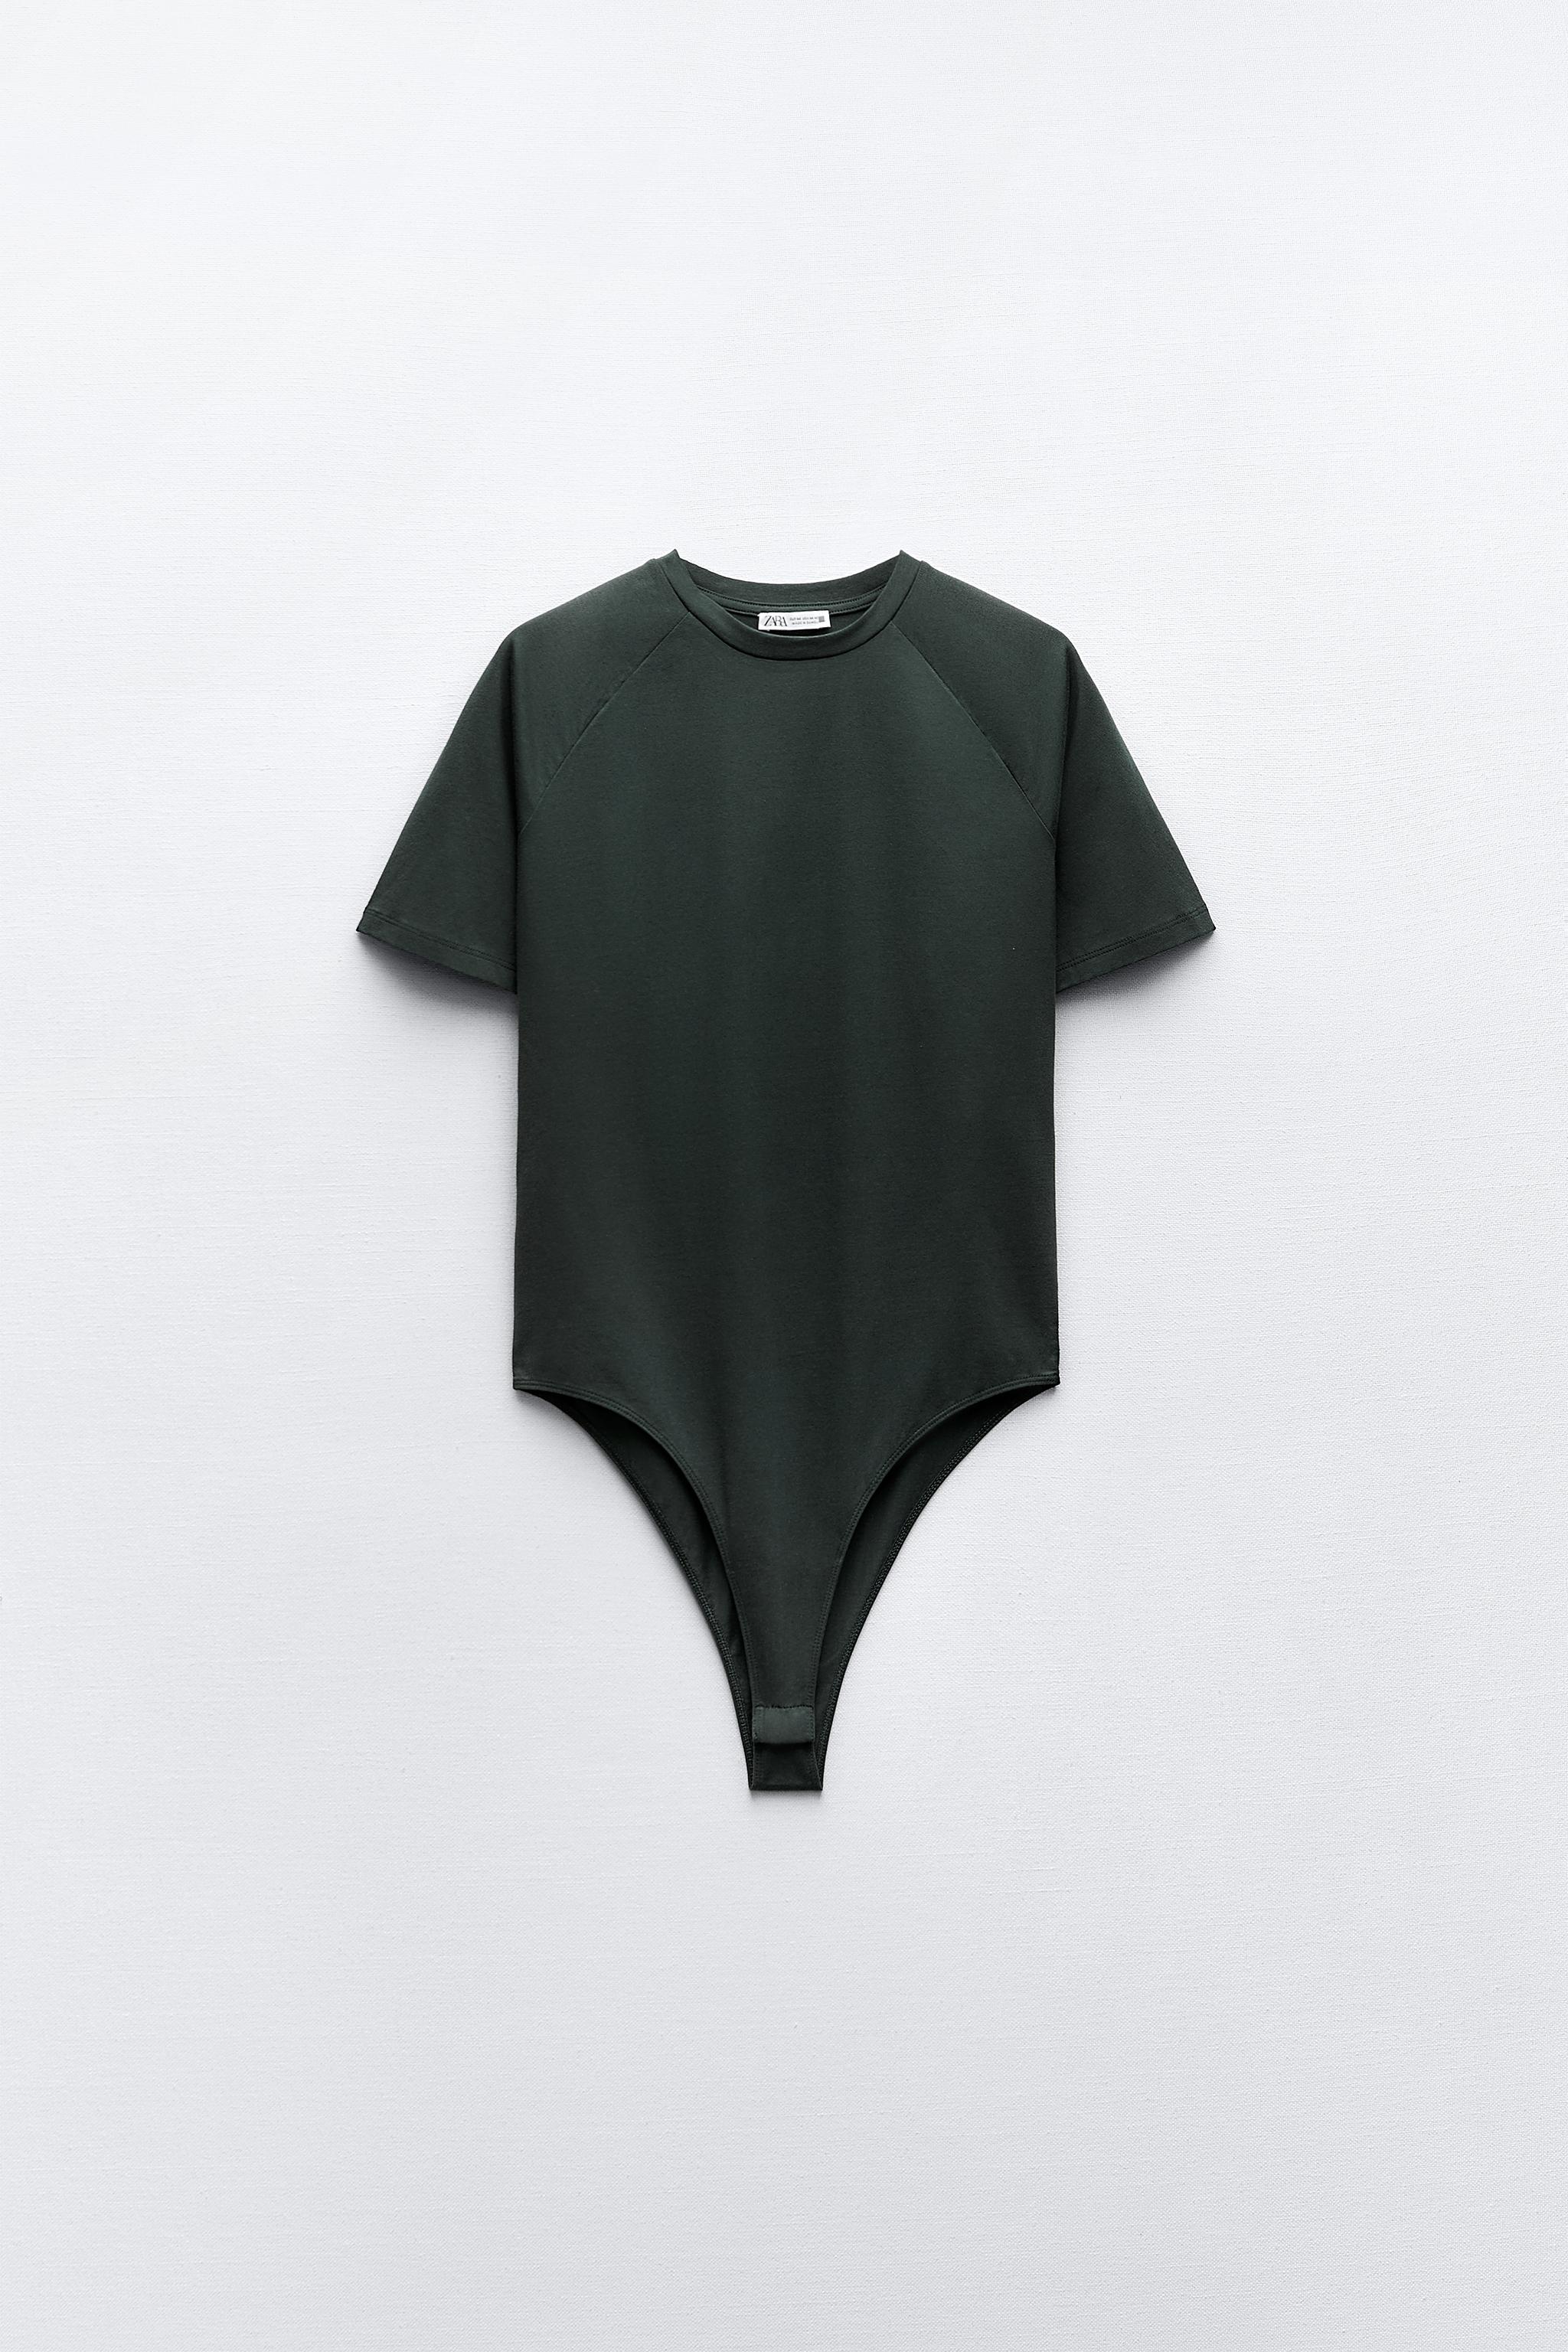 Zara Ruffle Sleeve Bodysuit Green Womens Size S/M Cotton Stretch